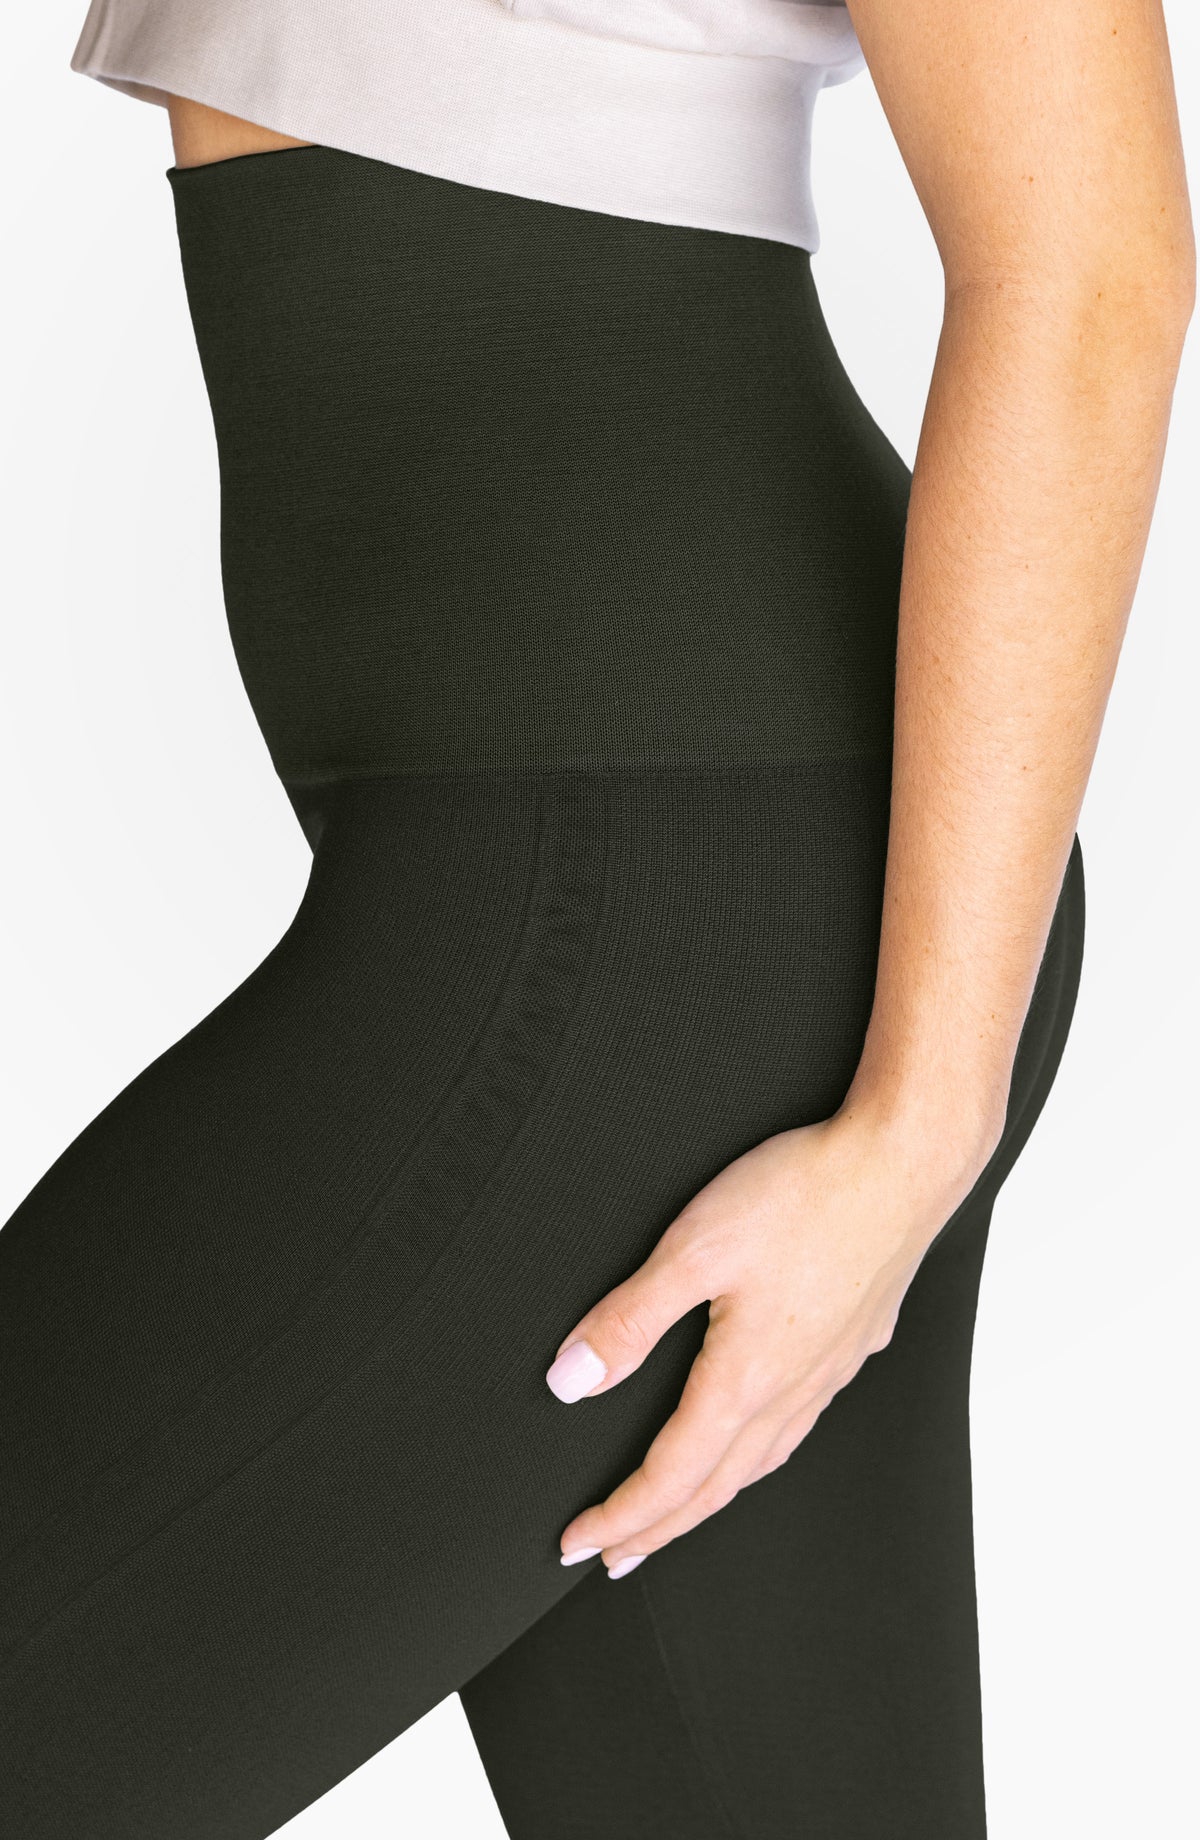 Bellefit High Waist Postpartum Support Leggings In Black